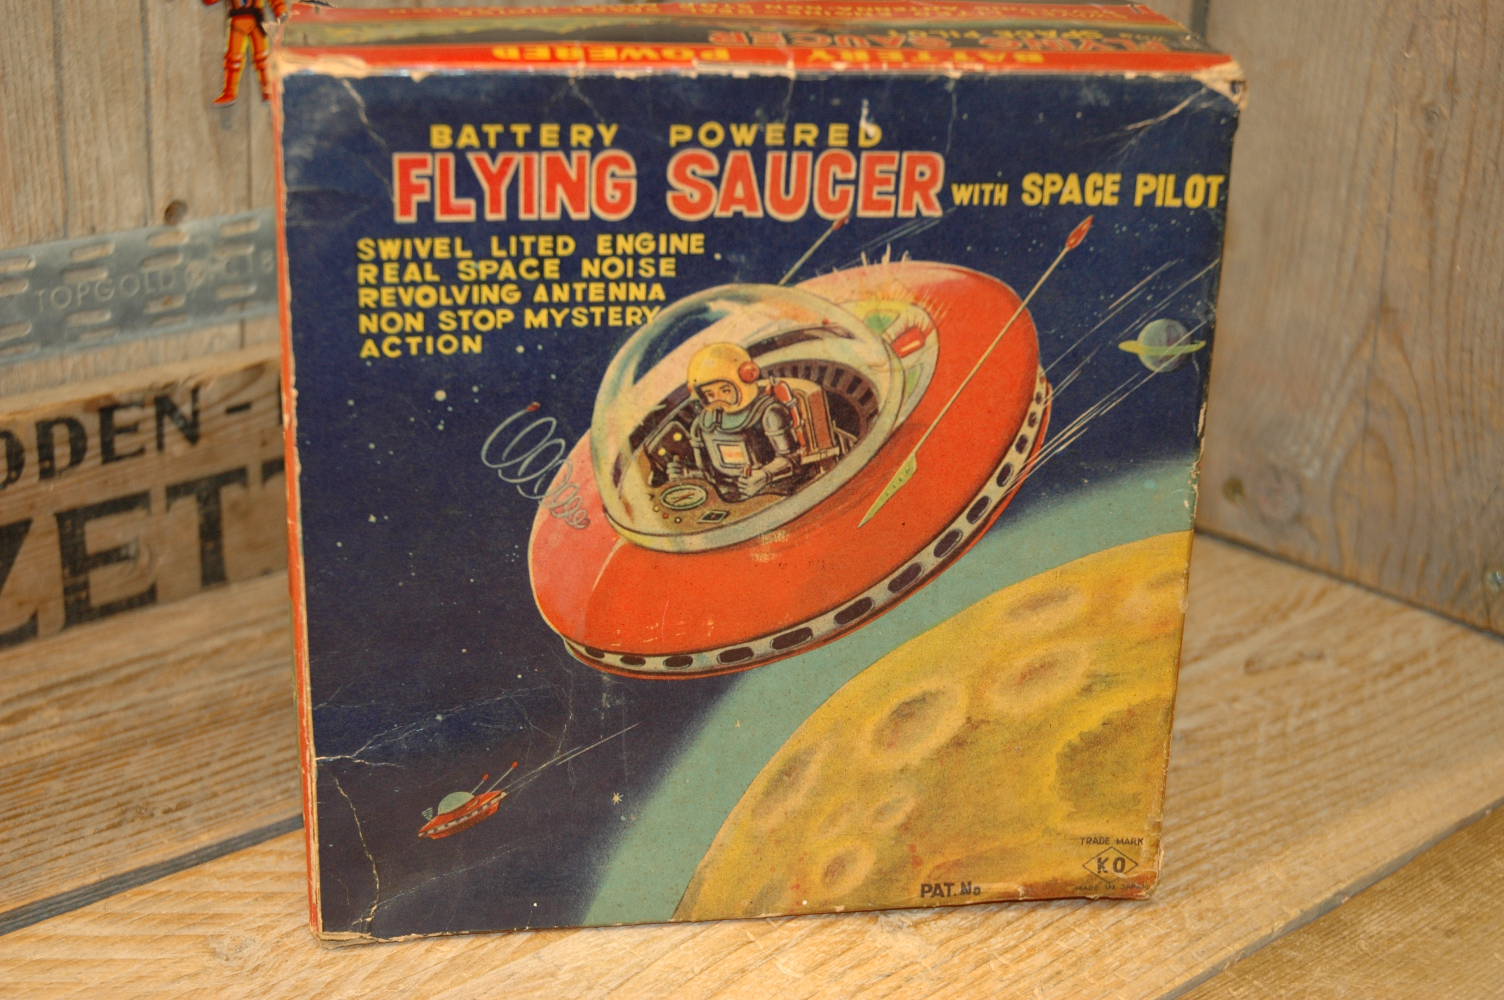 Yoshiya KO - Flying Saucer with GREEN pilot